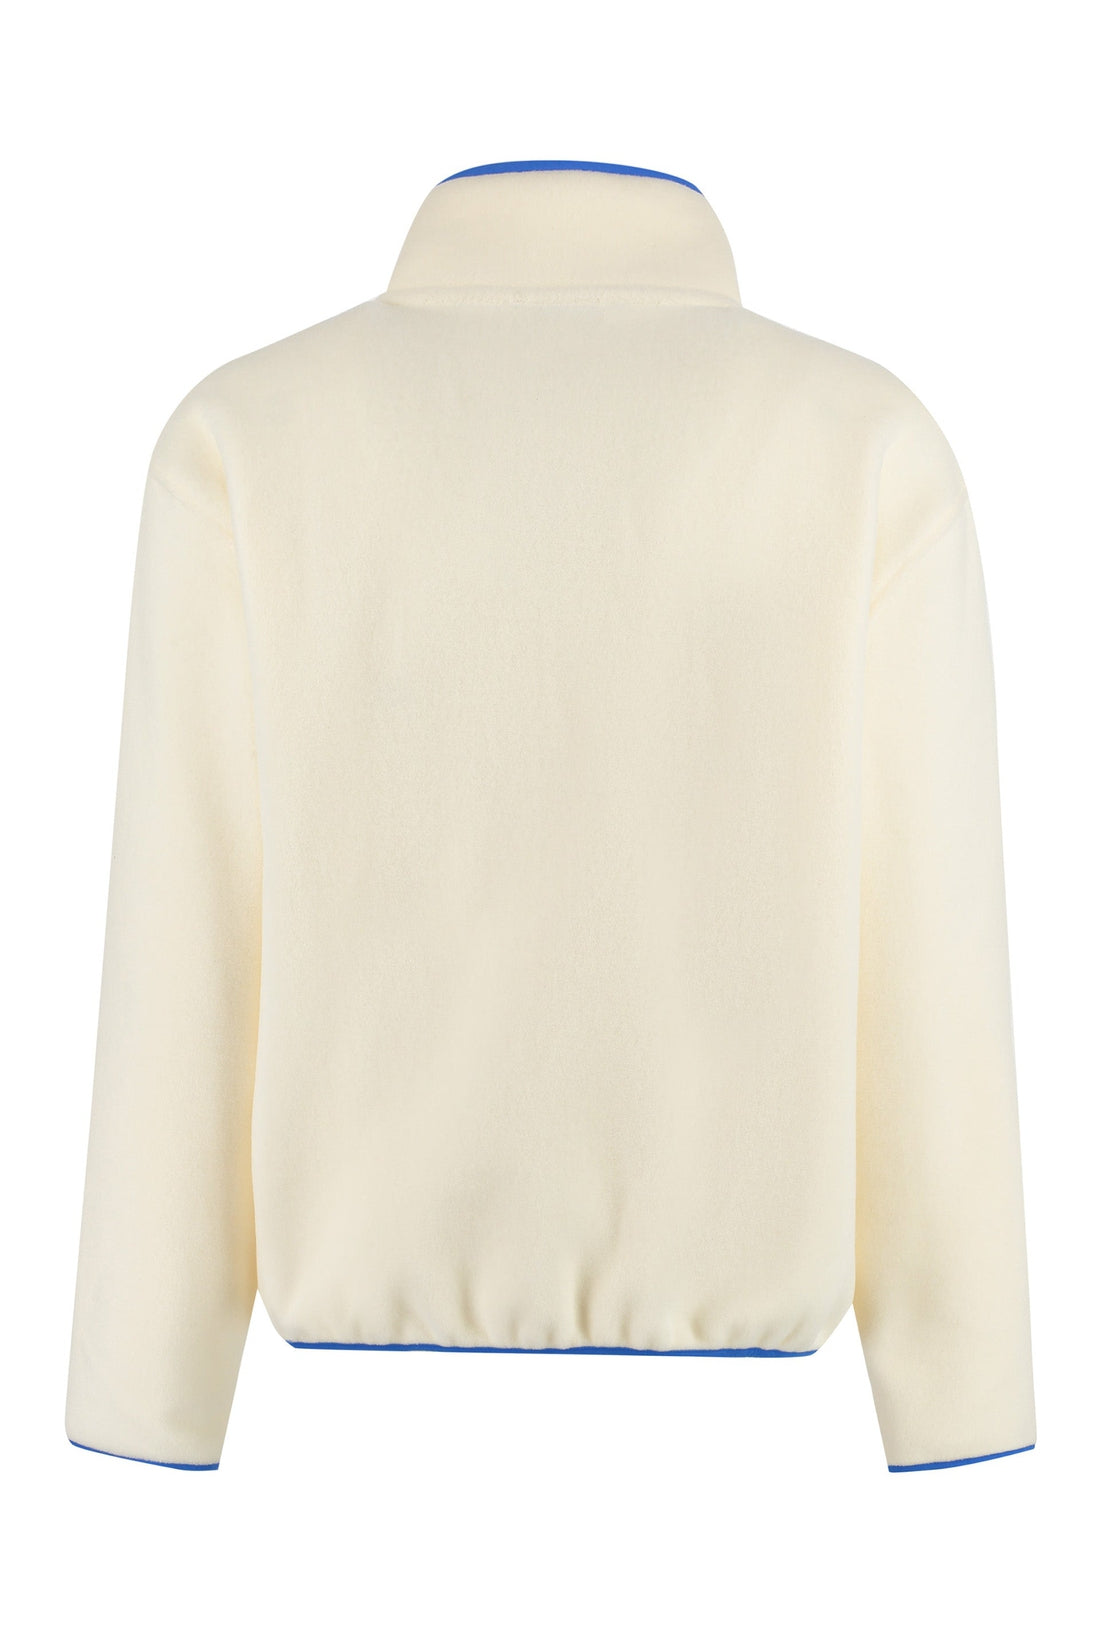 Sporty & Rich-OUTLET-SALE-Stand-up collar fleece sweatshirt-ARCHIVIST